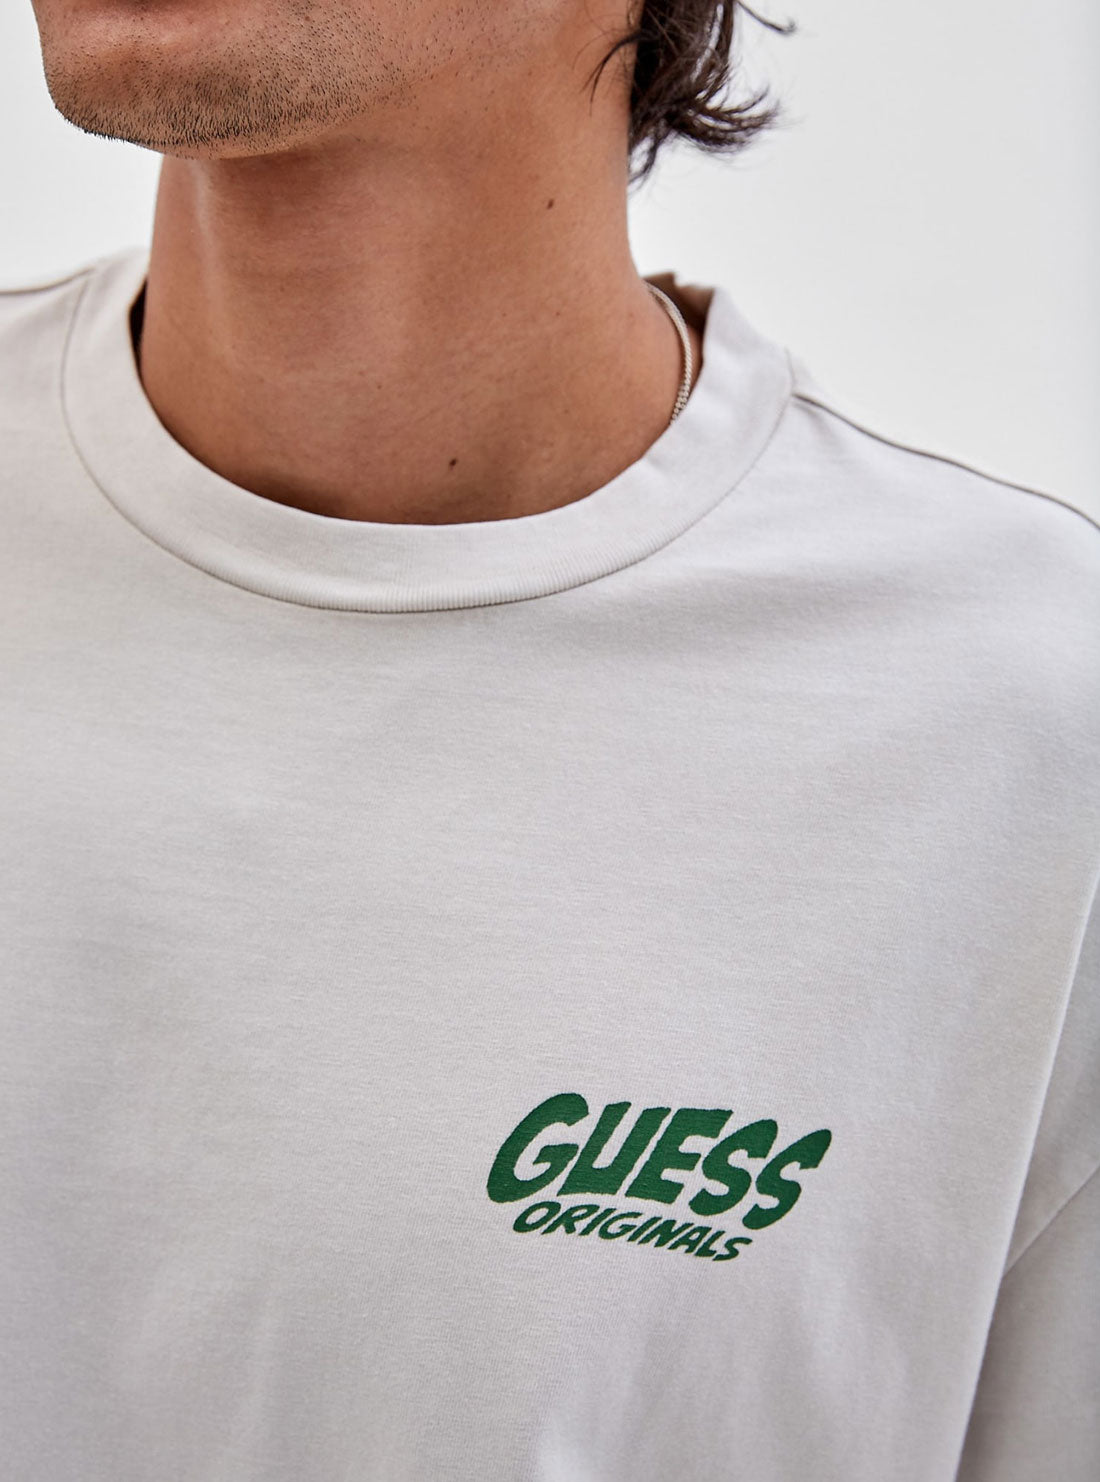 GUESS Men's Guess Originals x Batman White Collage T-Shirt M2BI10K9XF3 Detail View